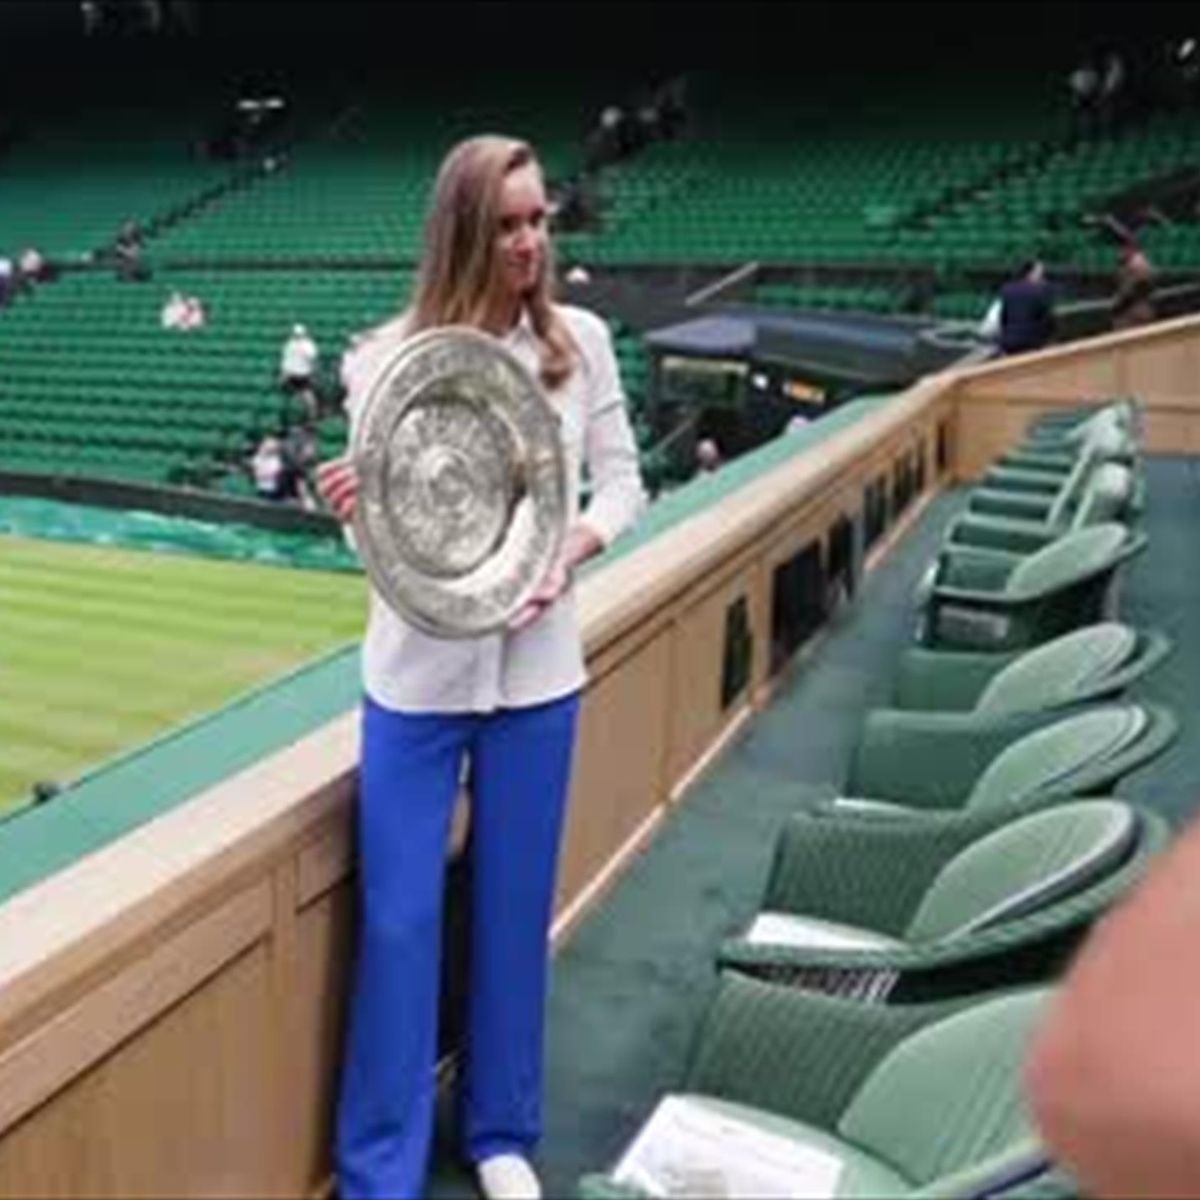 Novak Djokovic beats Nick Kyrgios to win seventh Wimbledon title - Day 14 wrap from Wimbledon - Tennis video